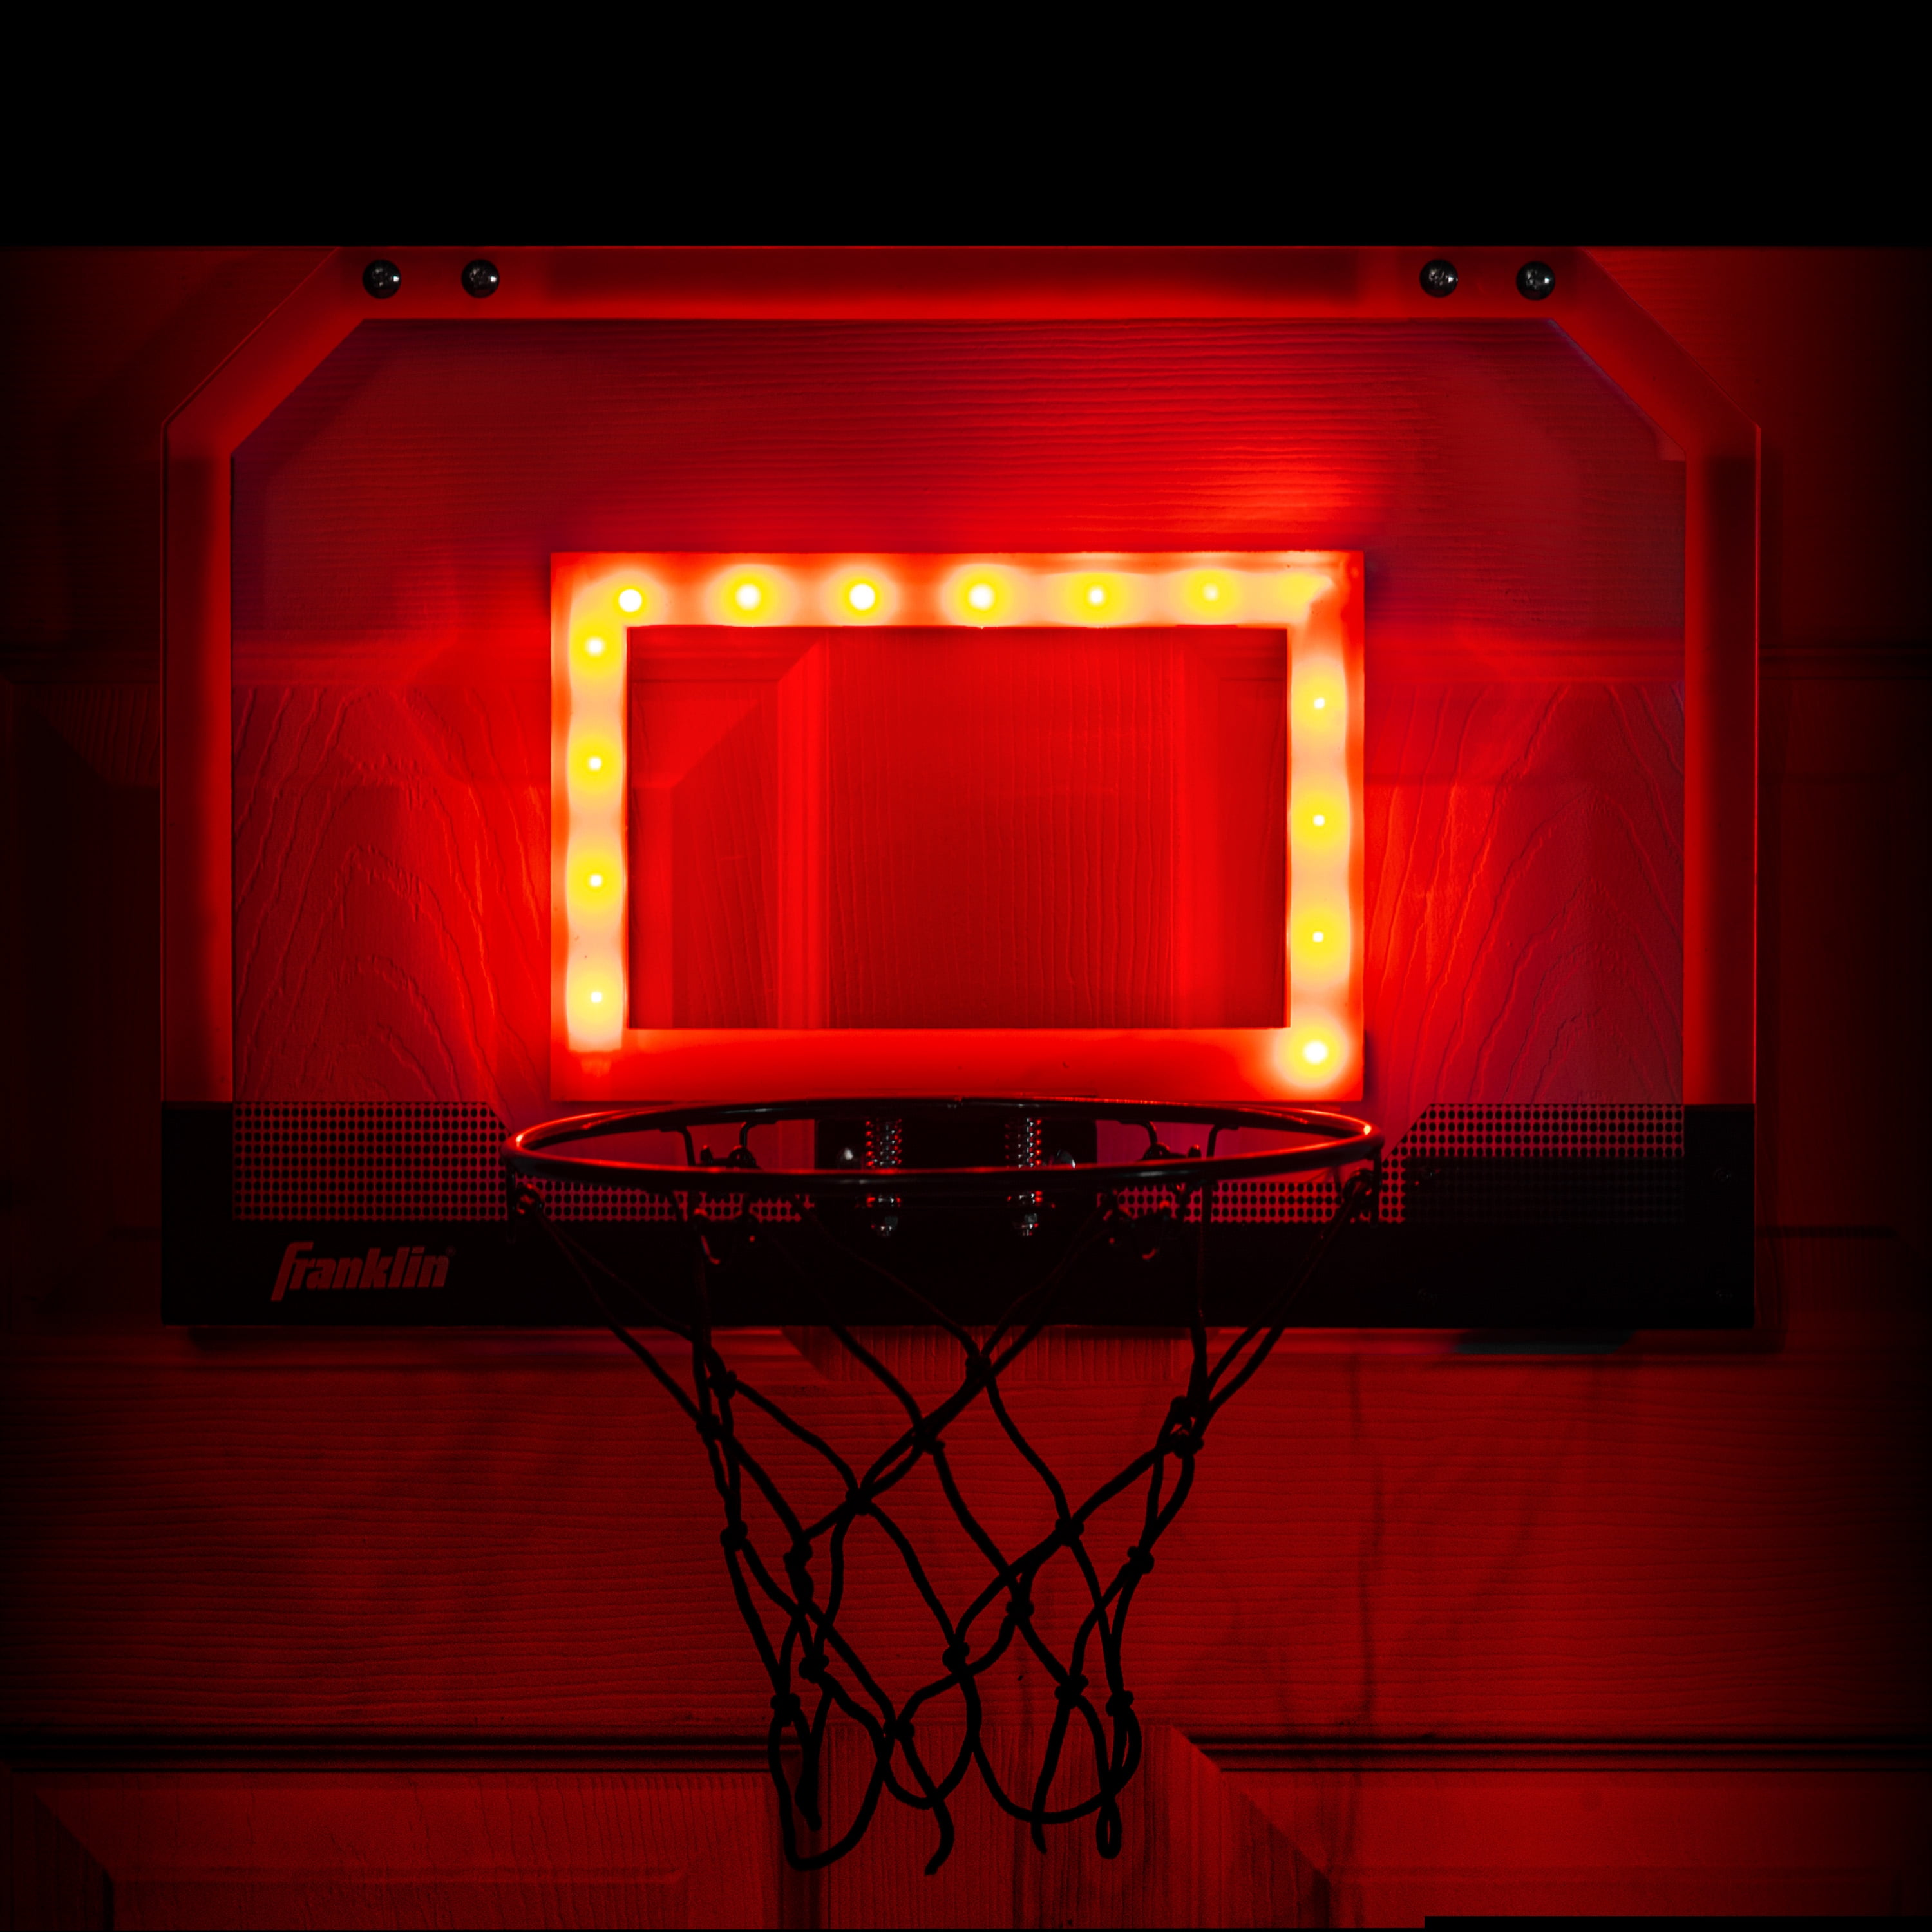 Franklin Sports NBA Charlotte Hornets Over The Door Basketball Hoop - Kids  Indoor Basketball Hoop with Mini